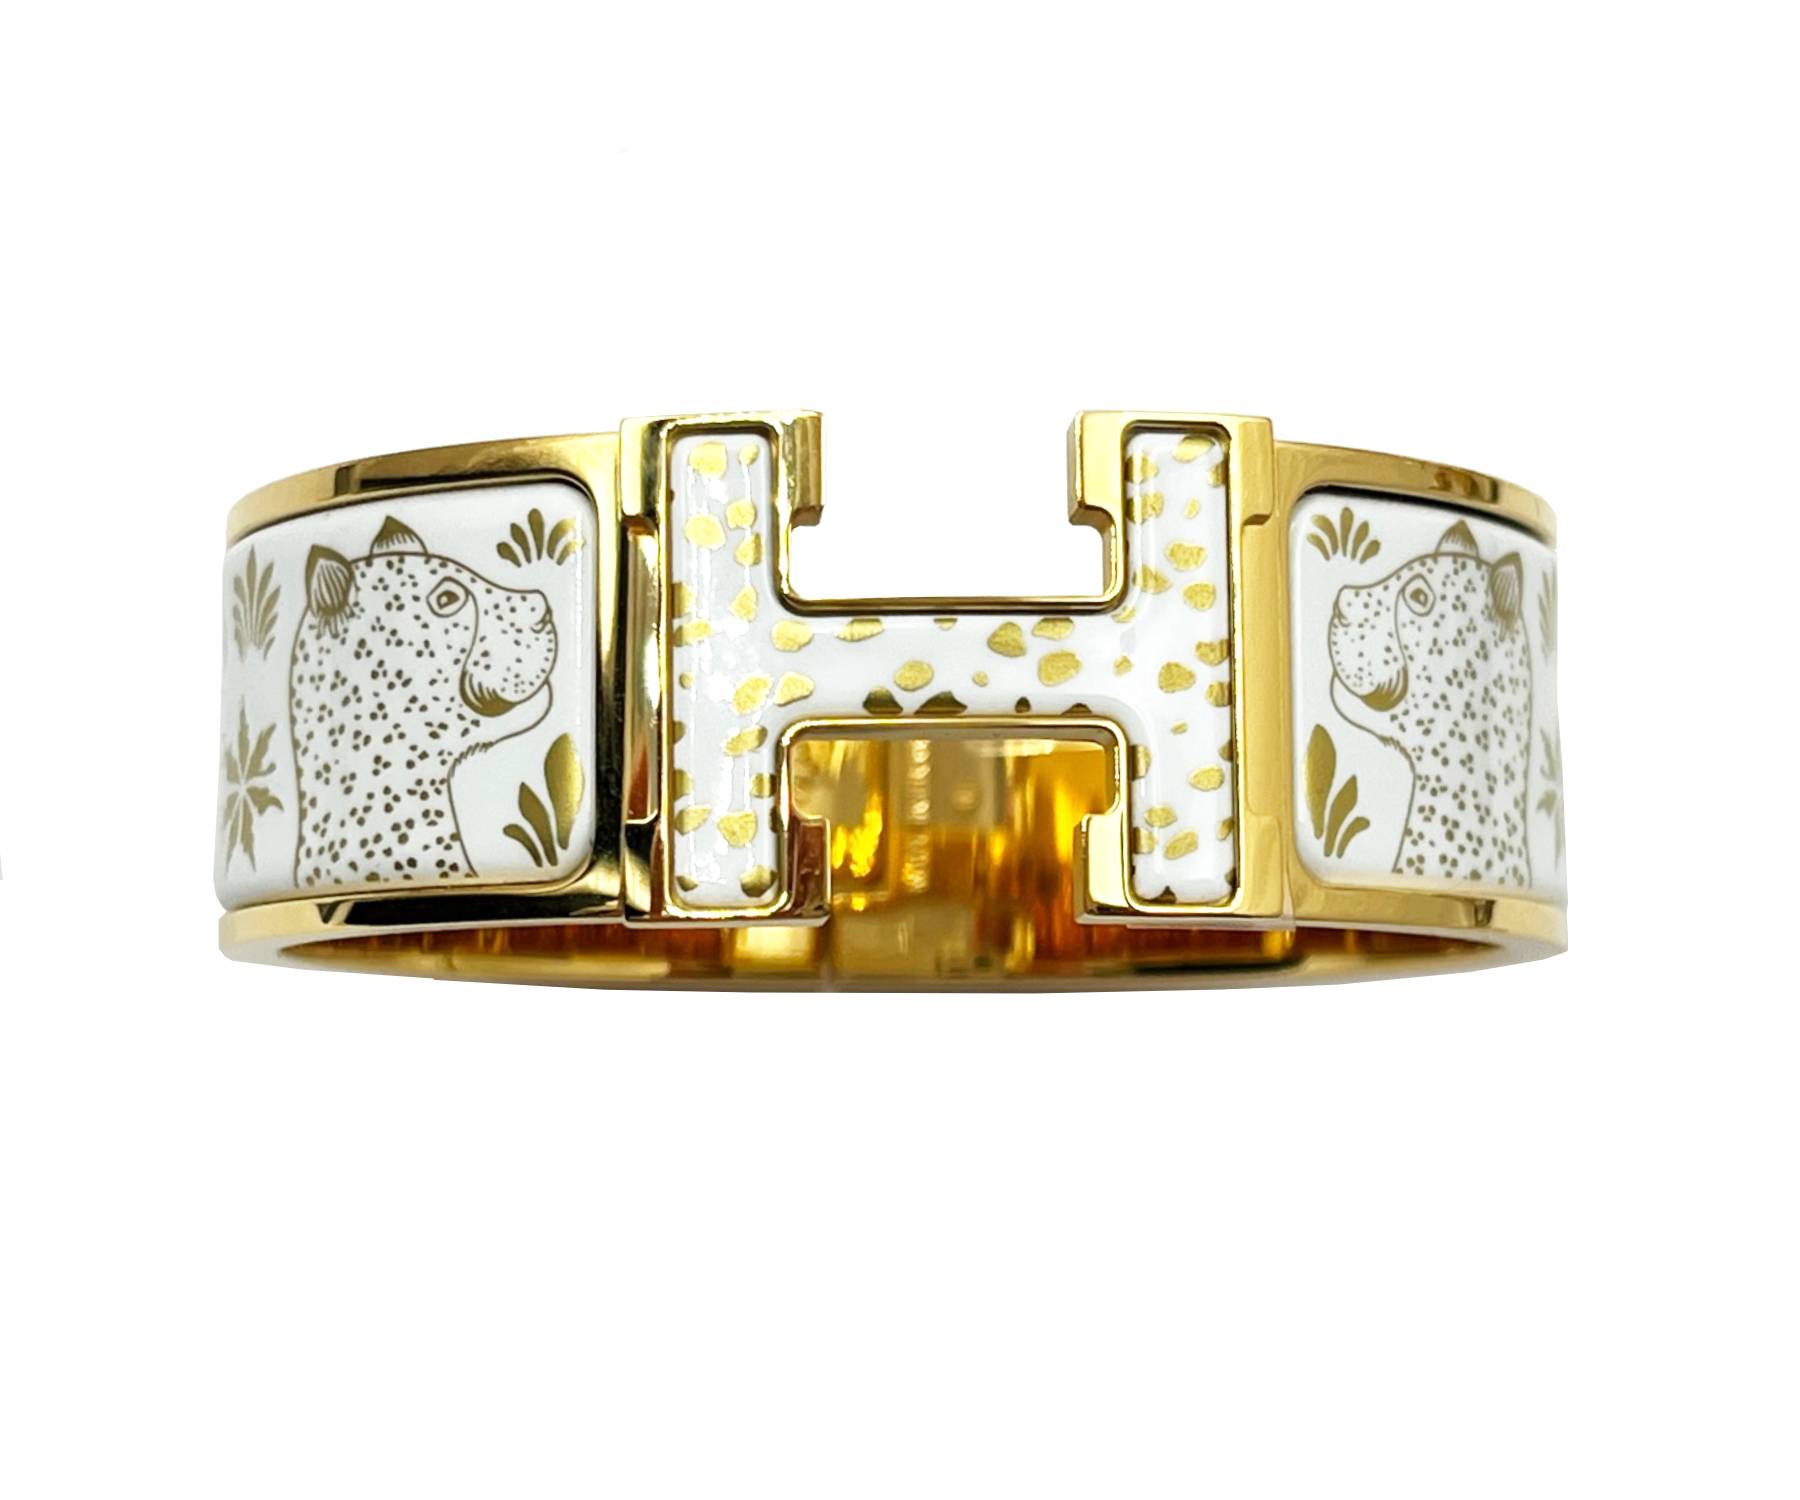 Hermes Clic H Diamond Bangle Bracelet in 18k Rose Gold